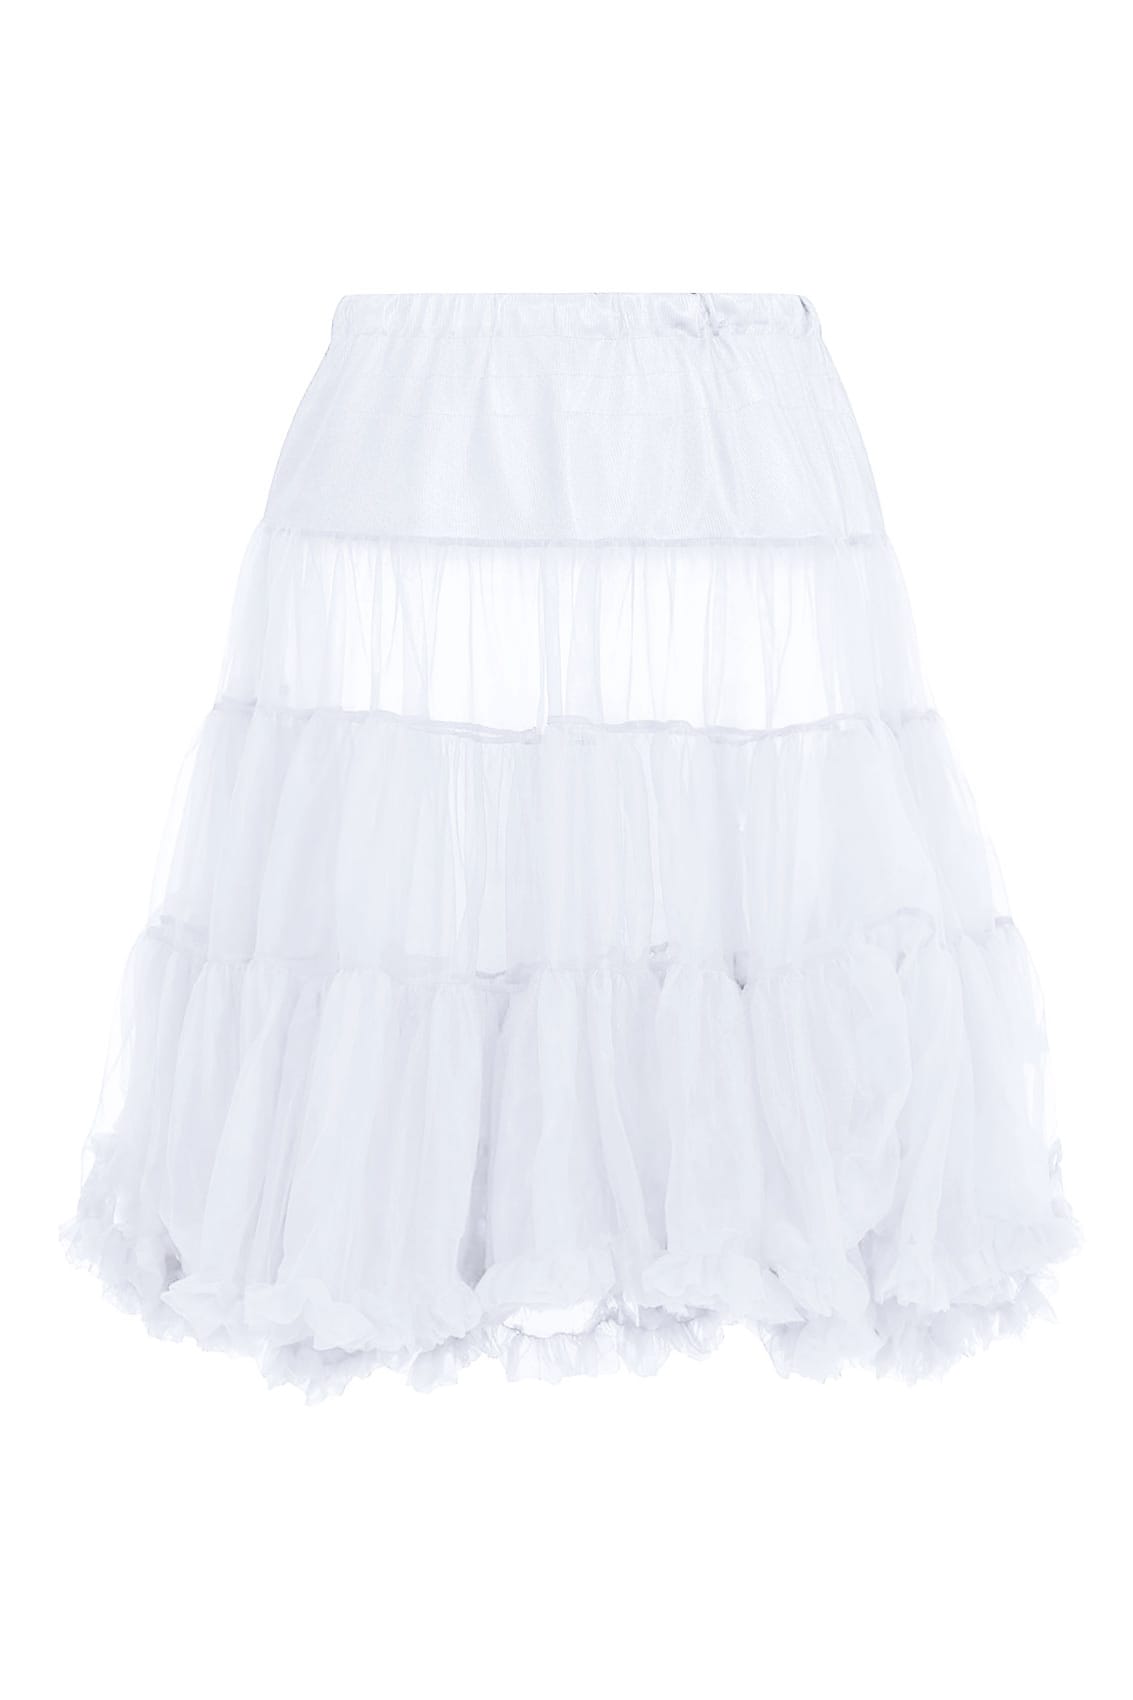 HELL BUNNY White Petticoat Flare Skirt Plus Sizes: L-2XL: 14-18 3XL-5XL ...